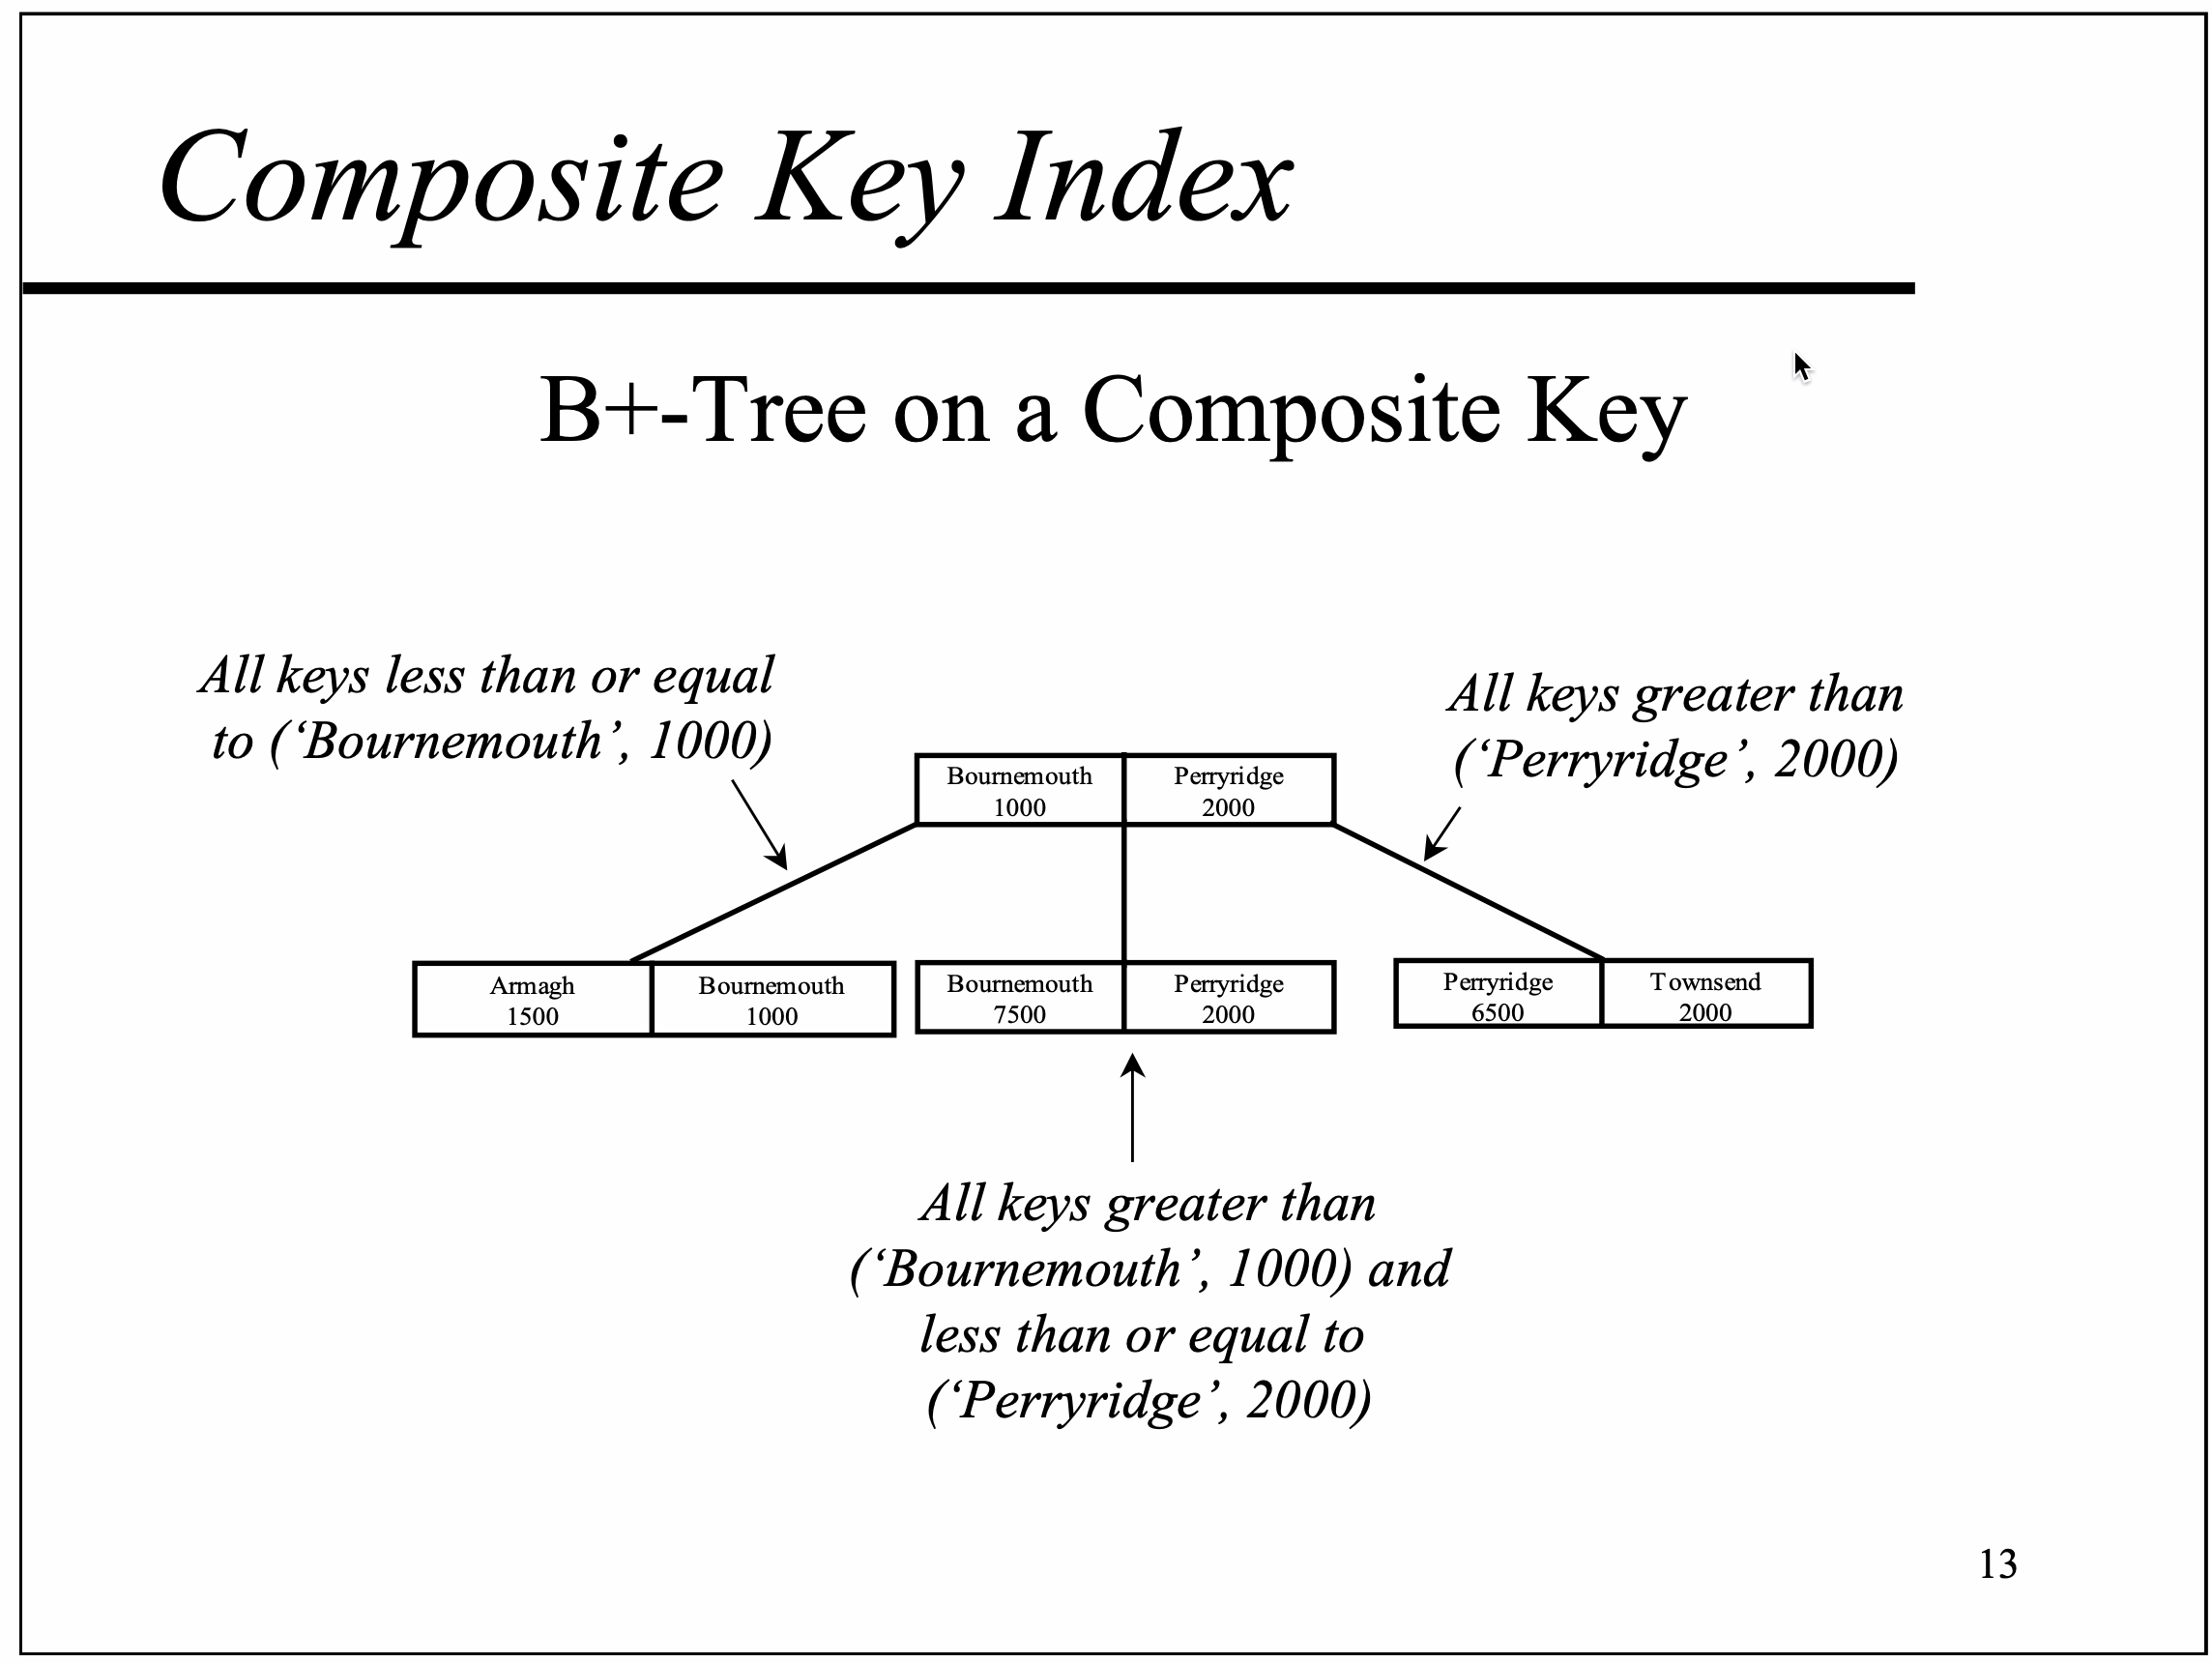 bplustree-composite-key-index